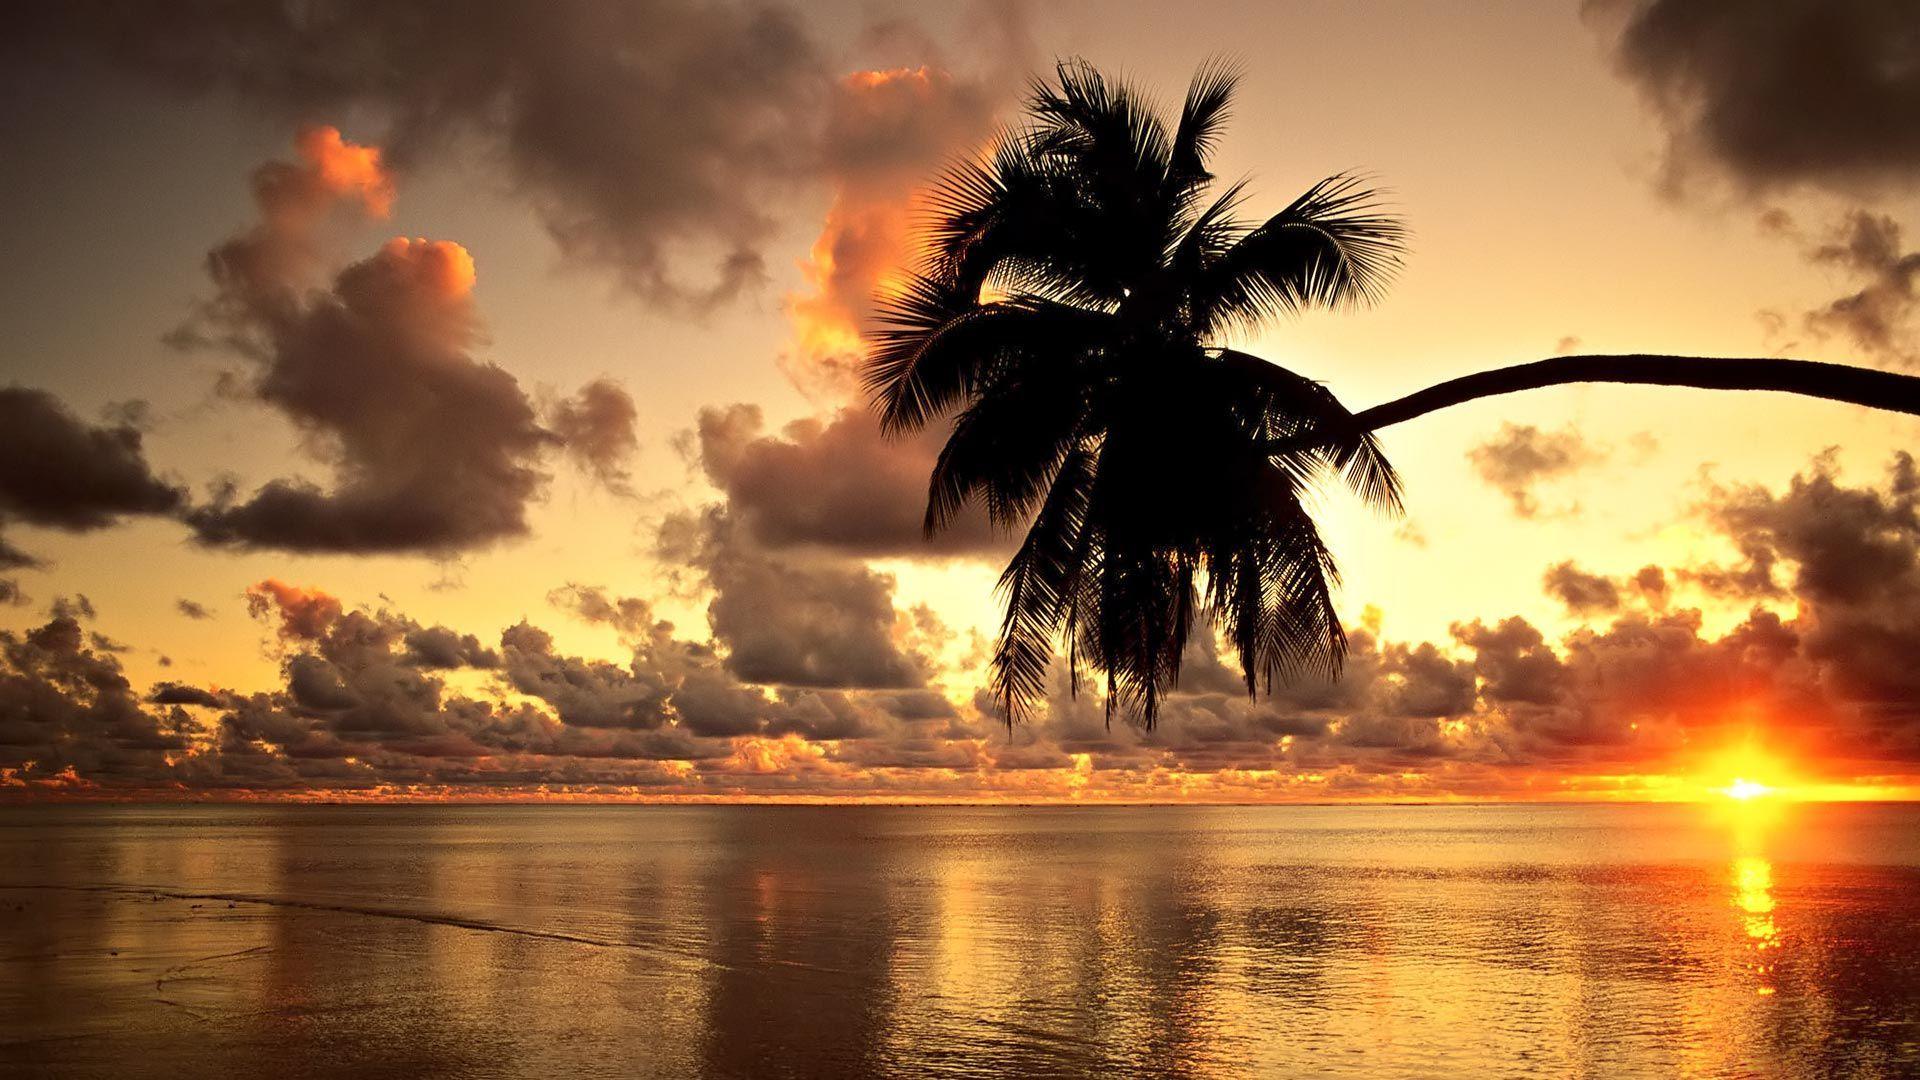 Desktop Wallpaper · Gallery · Nature · Hawaii Condos Golden sunset